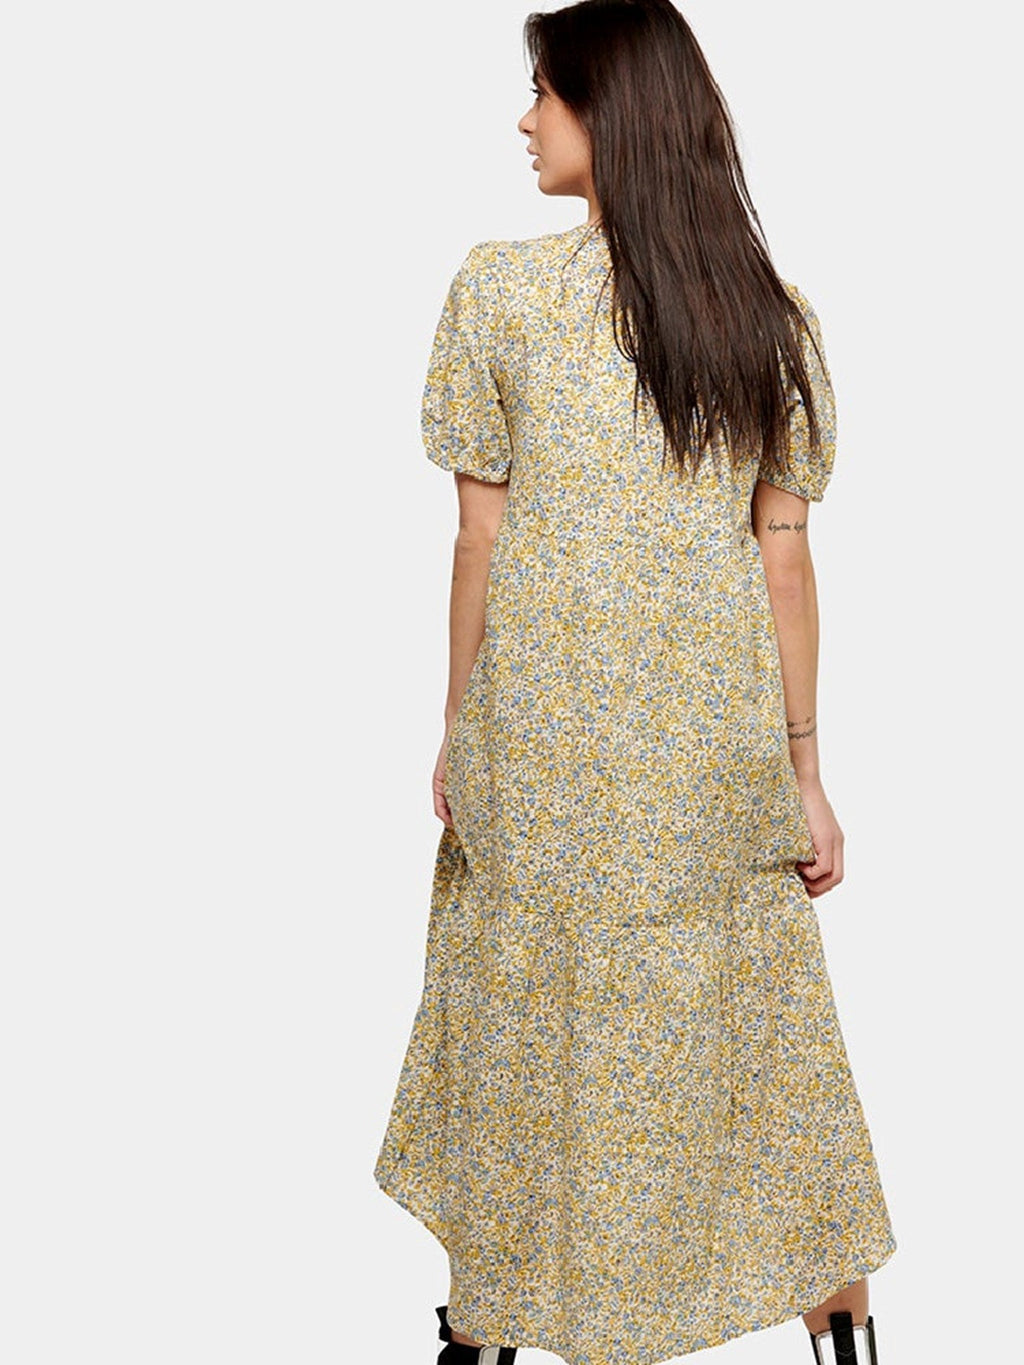 SOFIE长连衣裙 - 蓝色和黄色的花卉